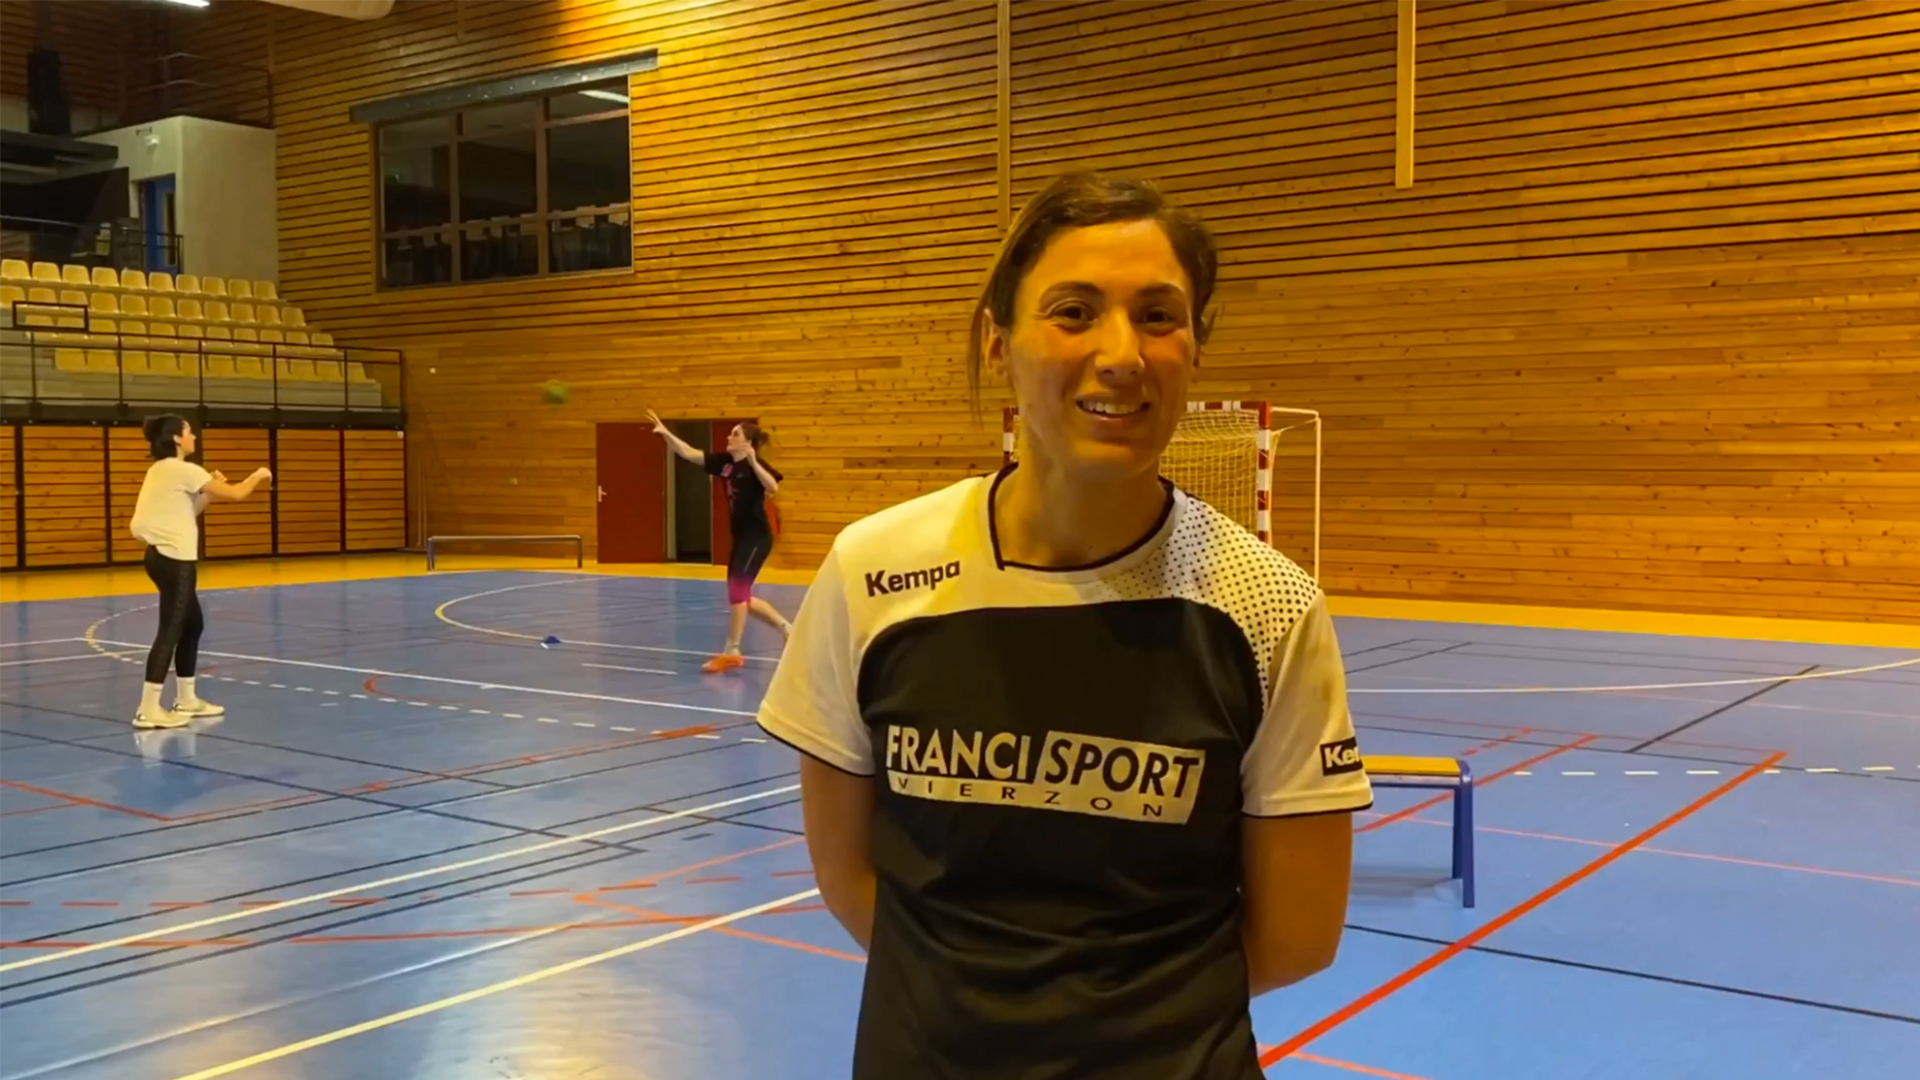 Fatima Ouali de l’entente handball de Bourges/Vierzon